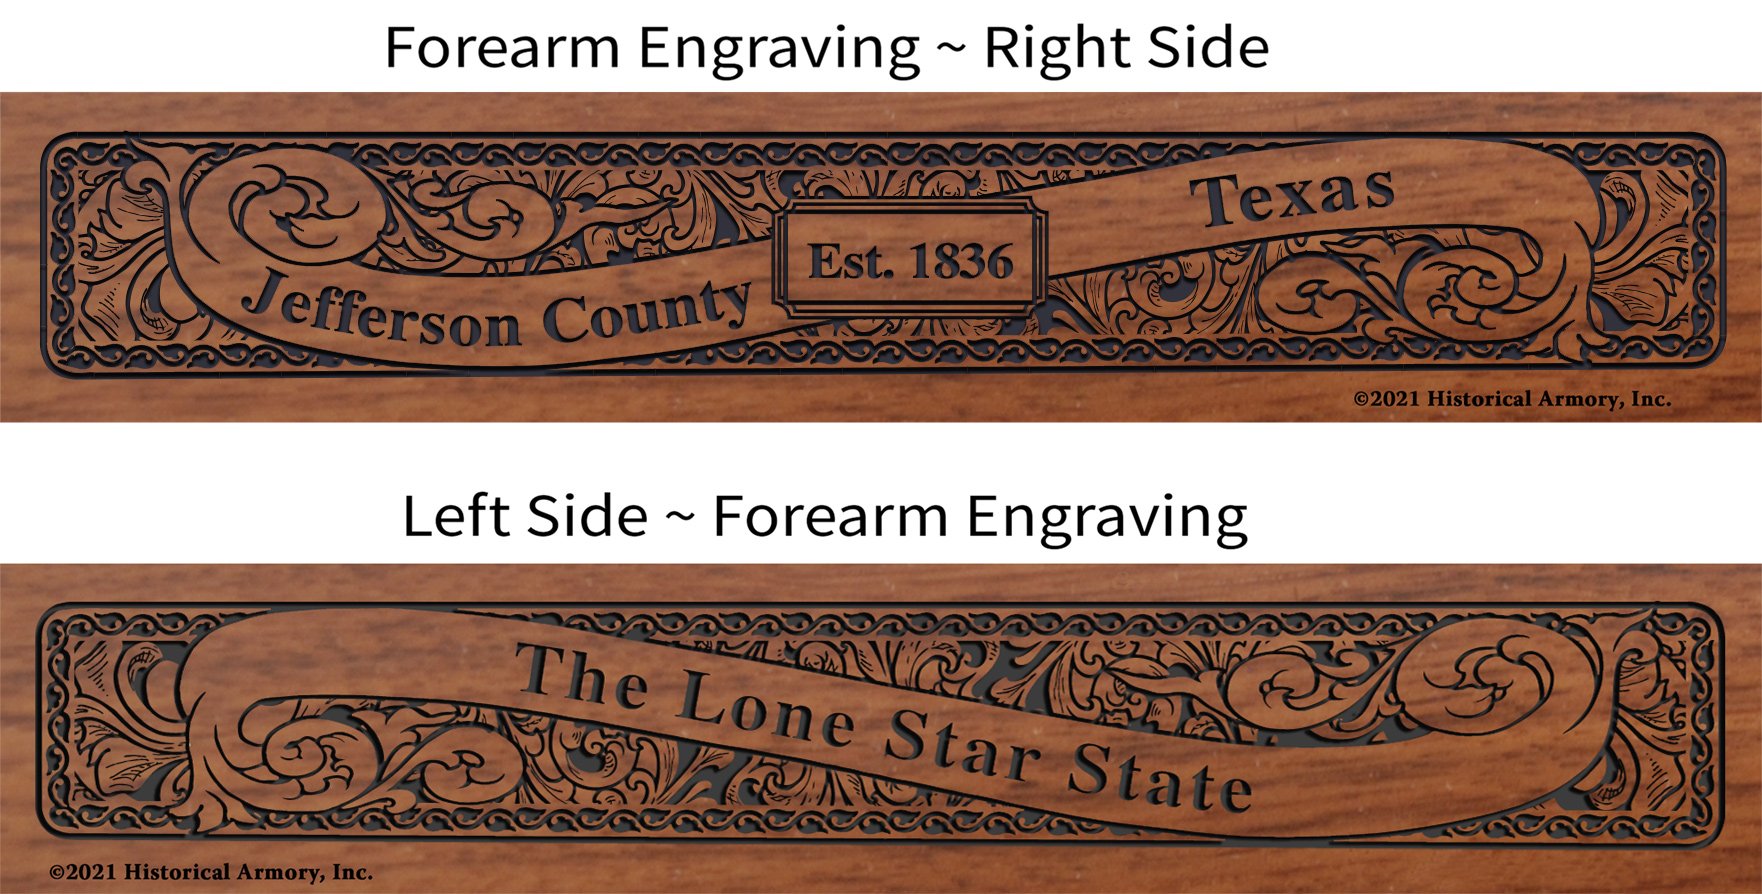 Jefferson County Texas Establishment and Motto History Engraved Rifle Forearm